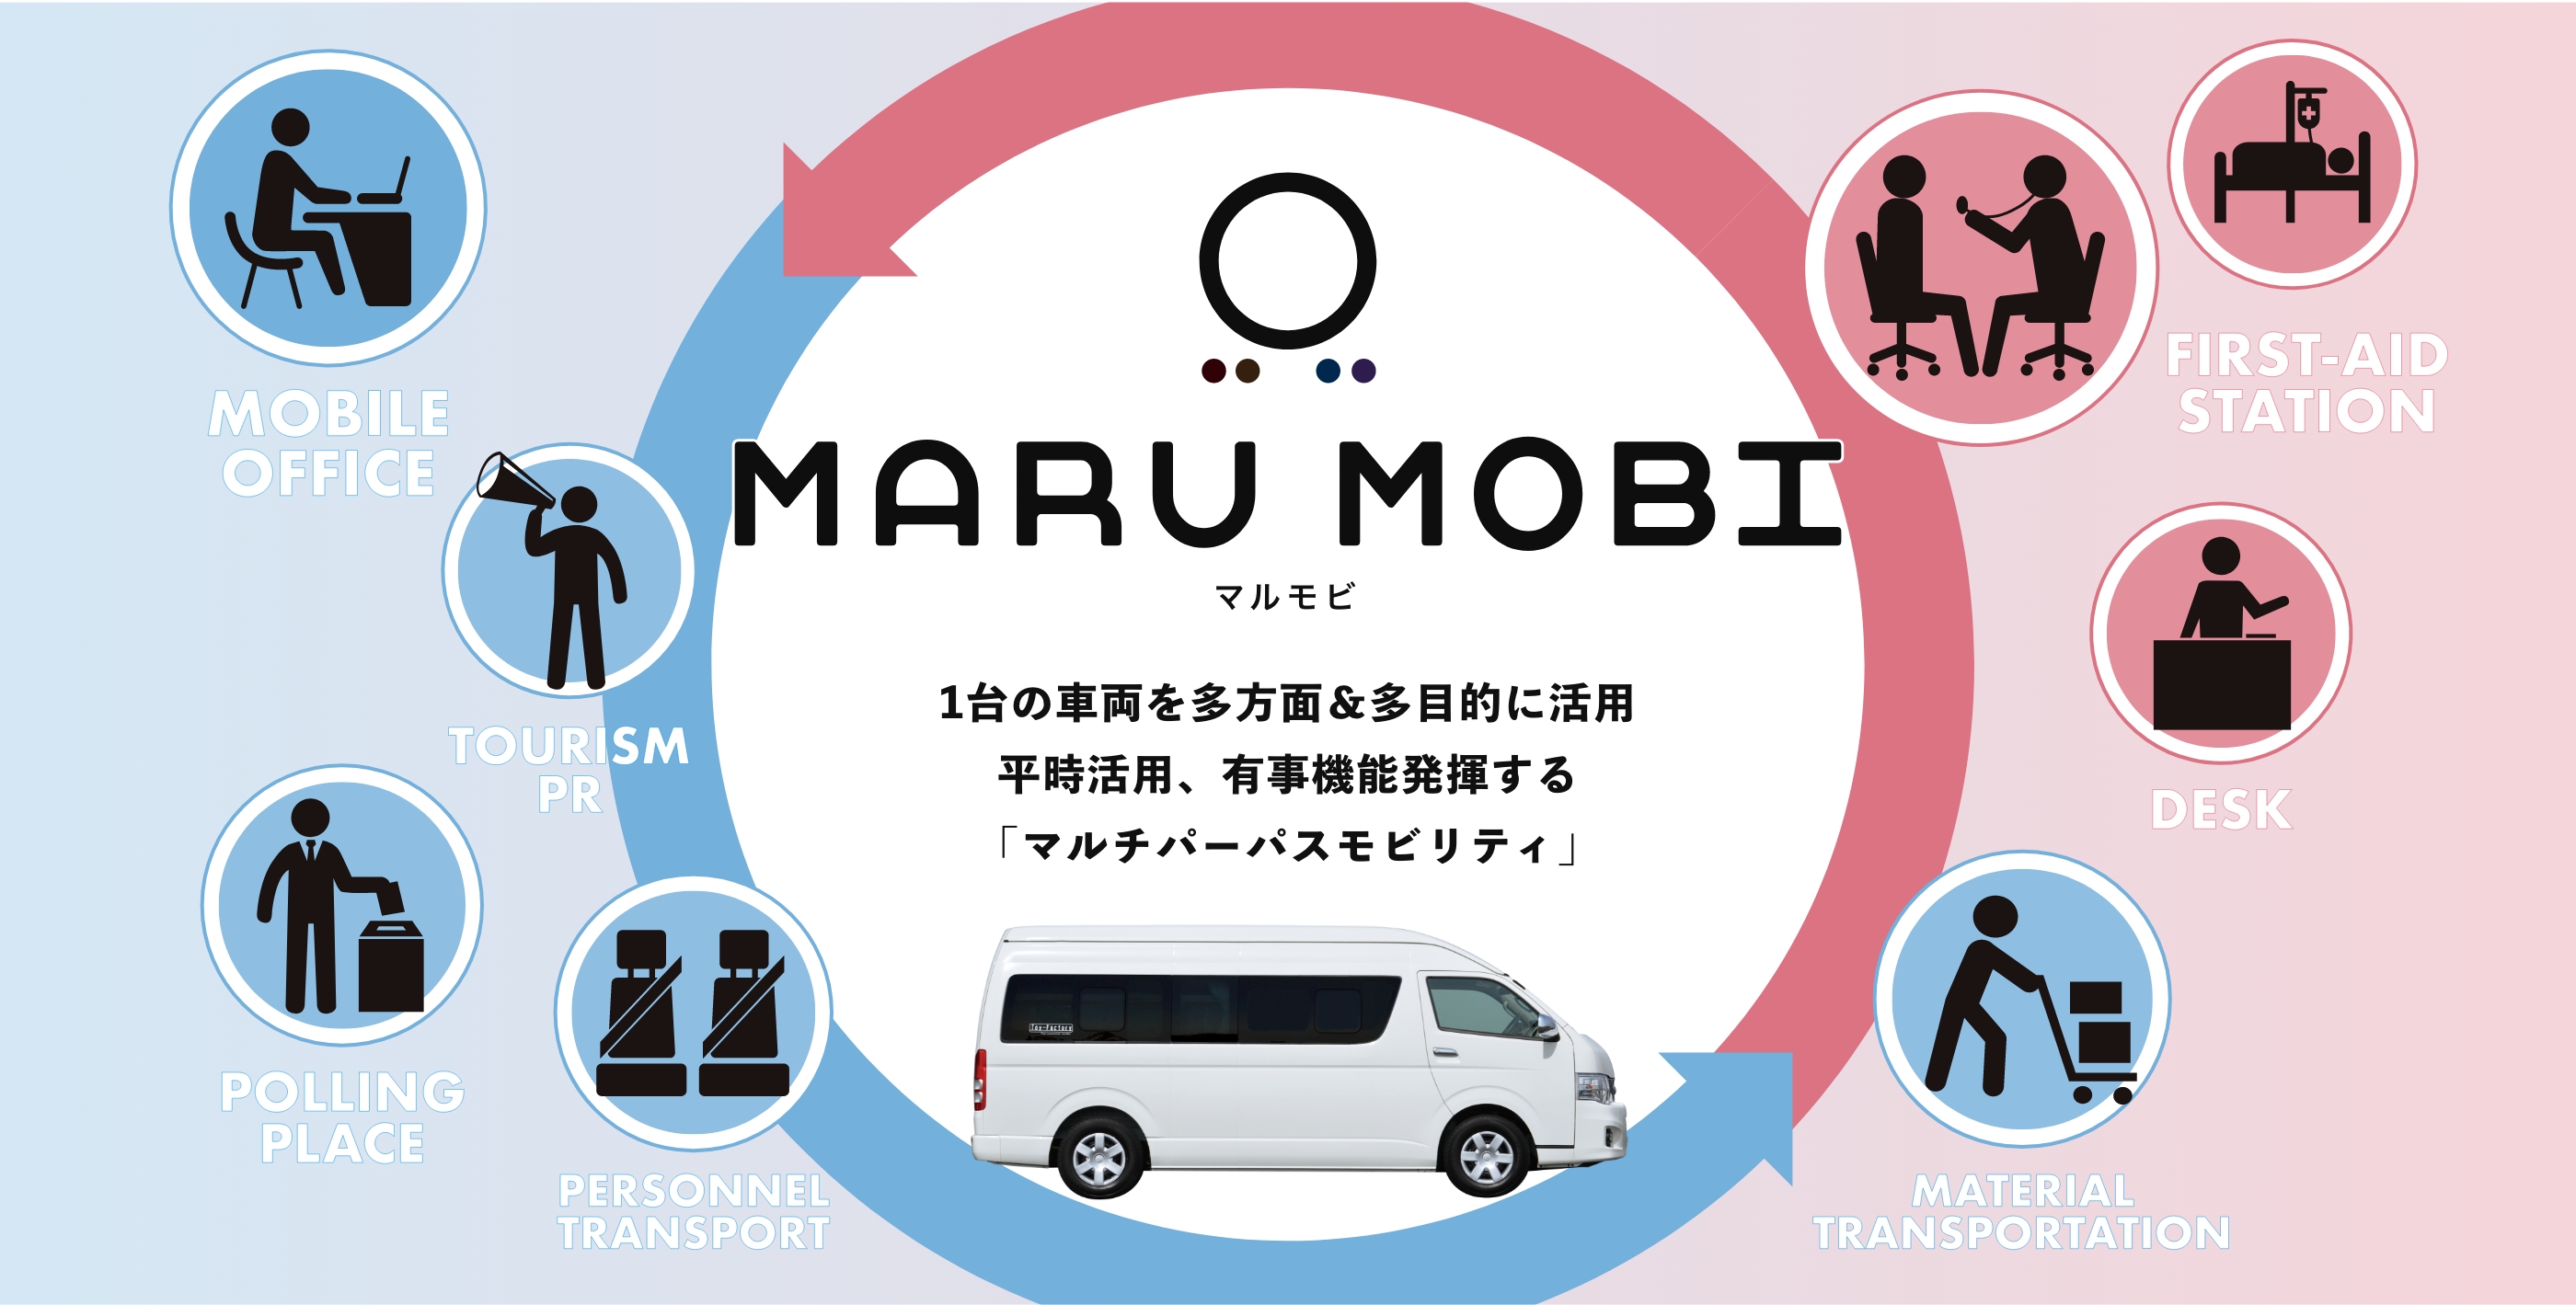 MARU MOBI 1台の車両を多方面&多目的に活用。平時活用、有事機能発揮する「マルチパーパスモビリティ」